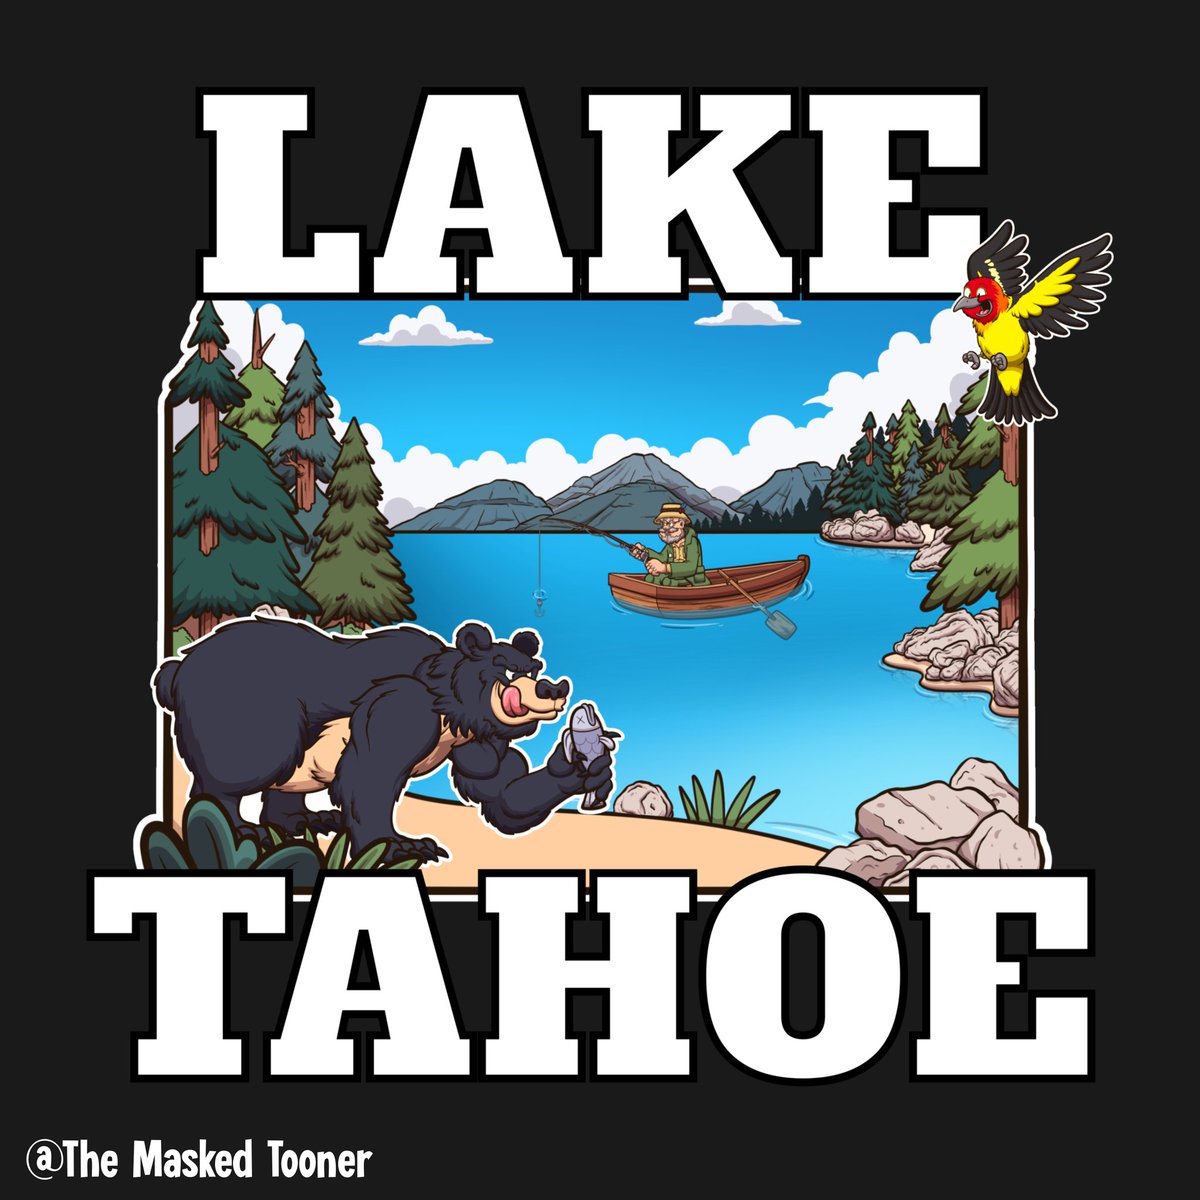 Lake Tahoe Nevada Outdoors design 🏞️🐻🐦
-
#laketahoe #nevada #outdoors #wilderness #adventure #park #camping #hiking #lakelife #fishing #fisherman #bear #bird #cartoon #westerntanager #characterdesign #graphicdesign #tshirtdesign #cartoontshirt #tshirtdesigner #redbubble